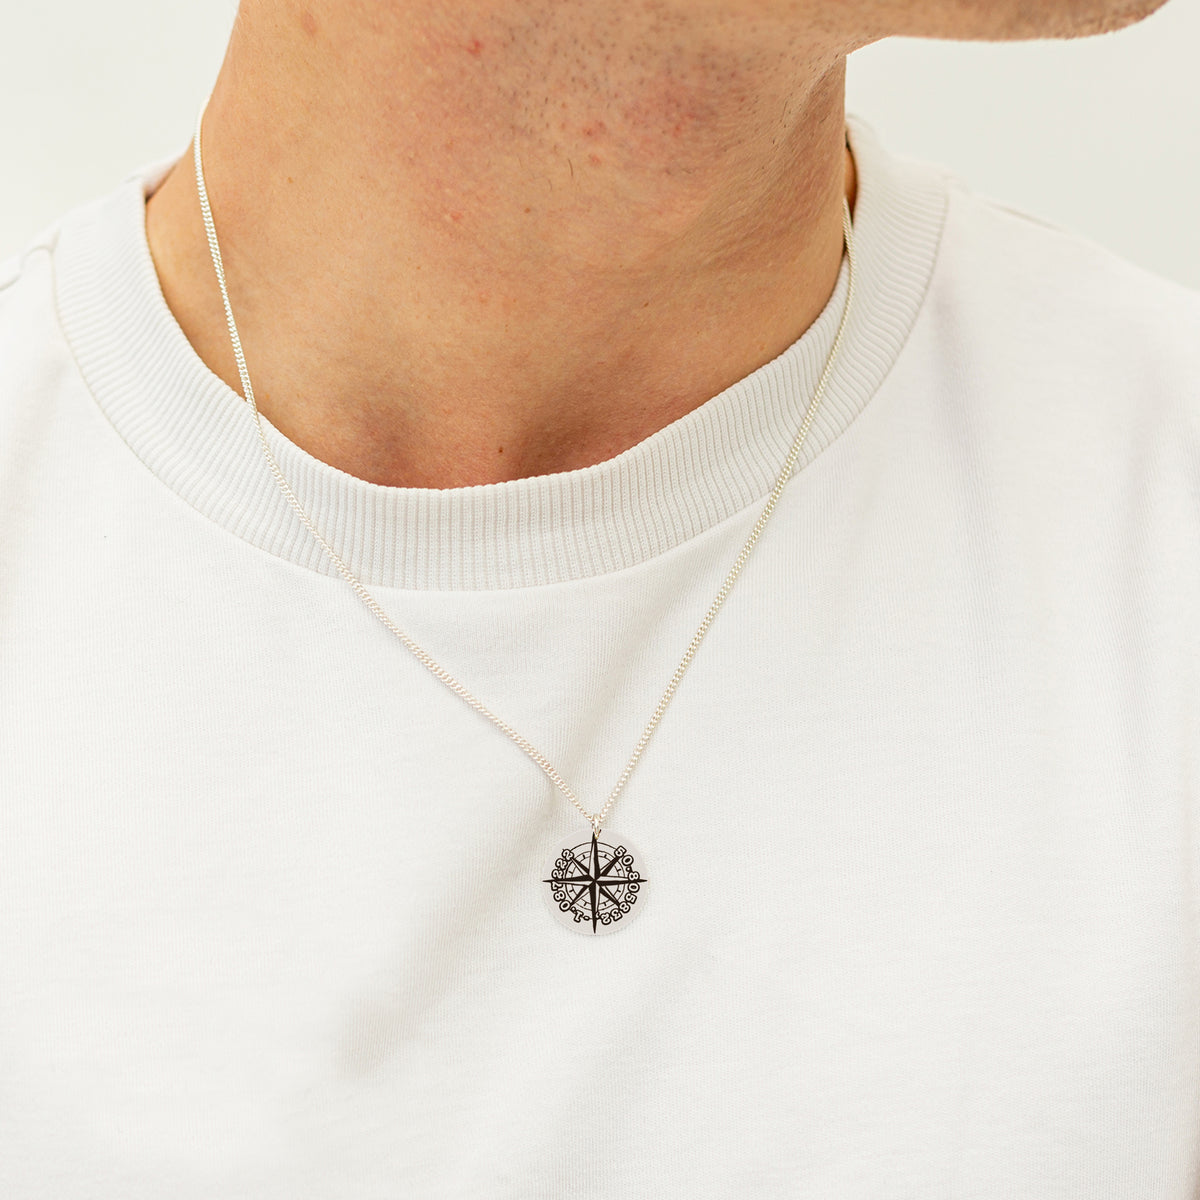 mens necklace travel gift saint christopher idea latitude longitude coordinates compass pendant sterling silver